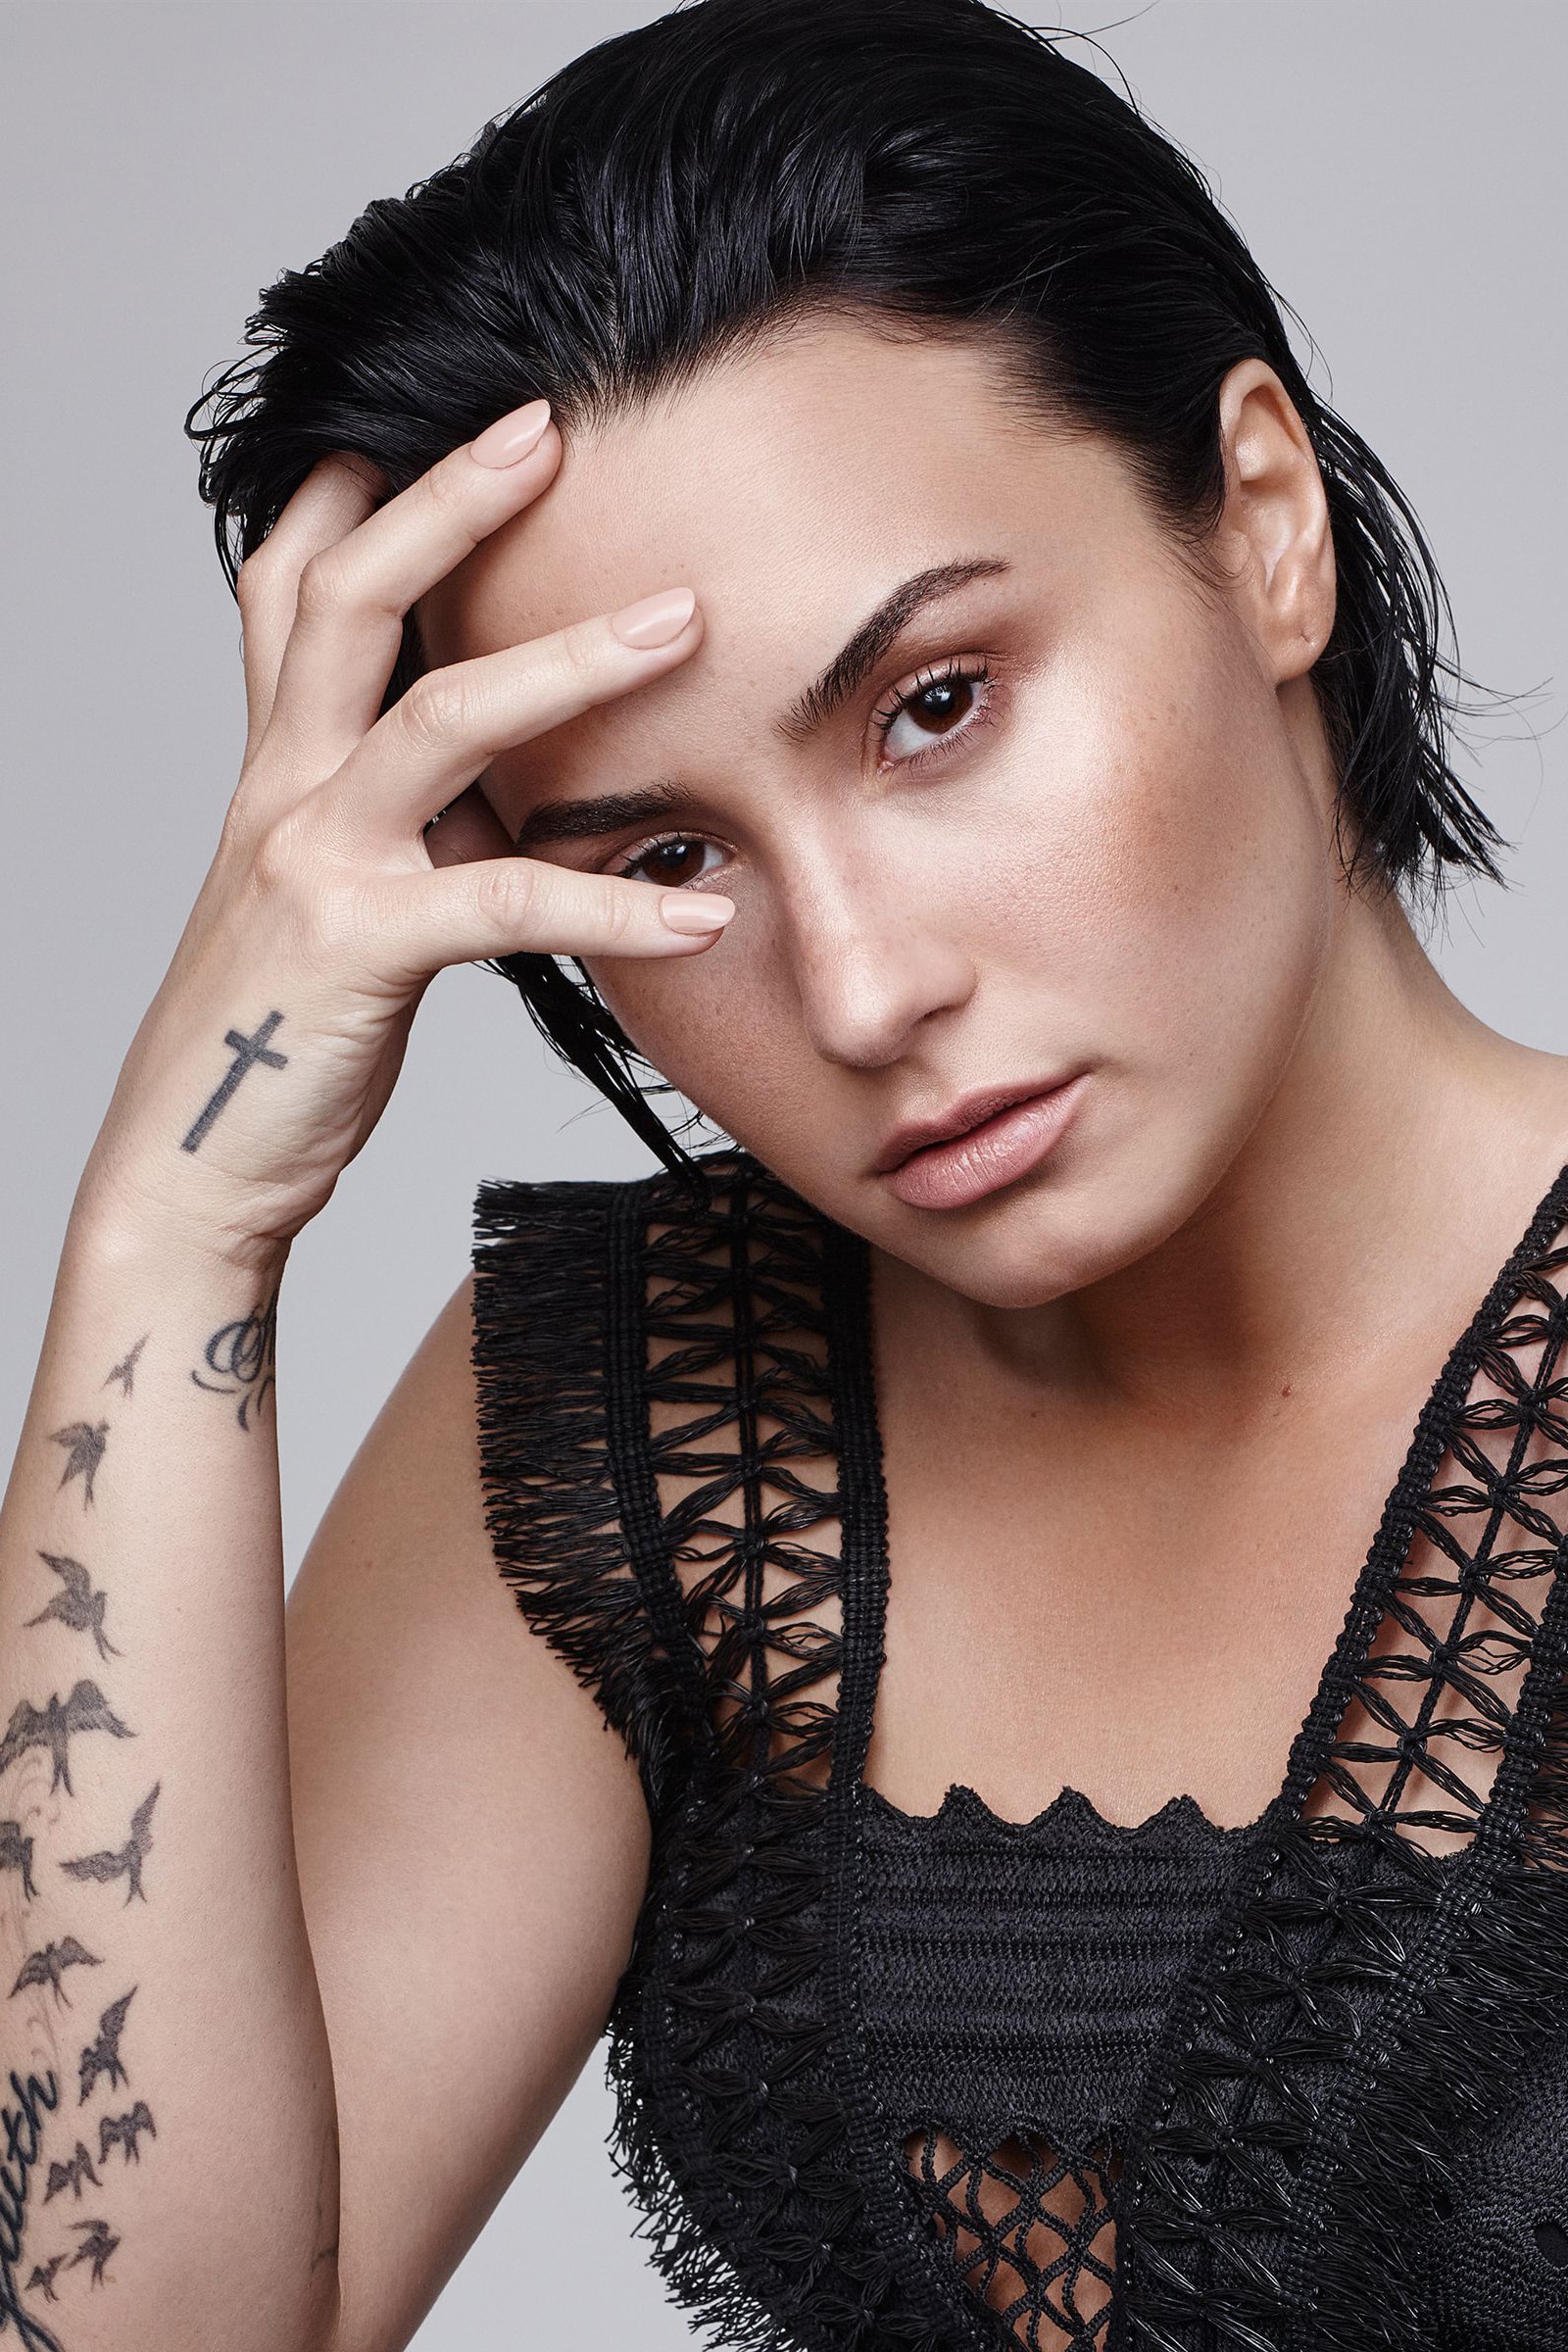 Demi Lovato Heroin Overdose Statement Drugs Mental Health Addiction Note Fans